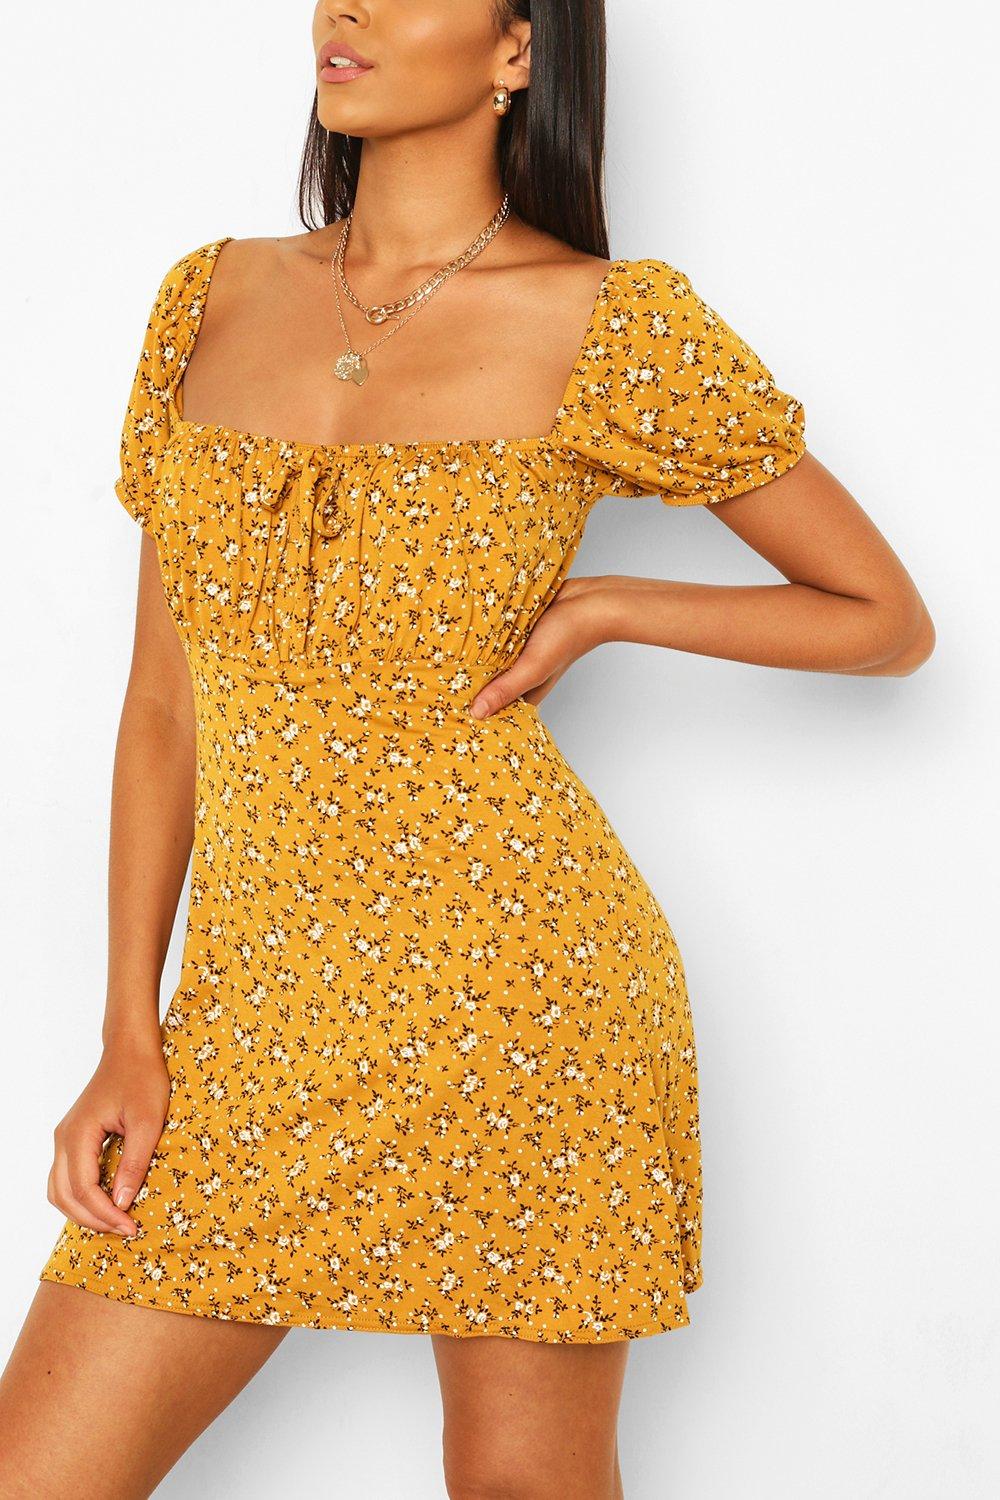 boohoo yellow floral dress